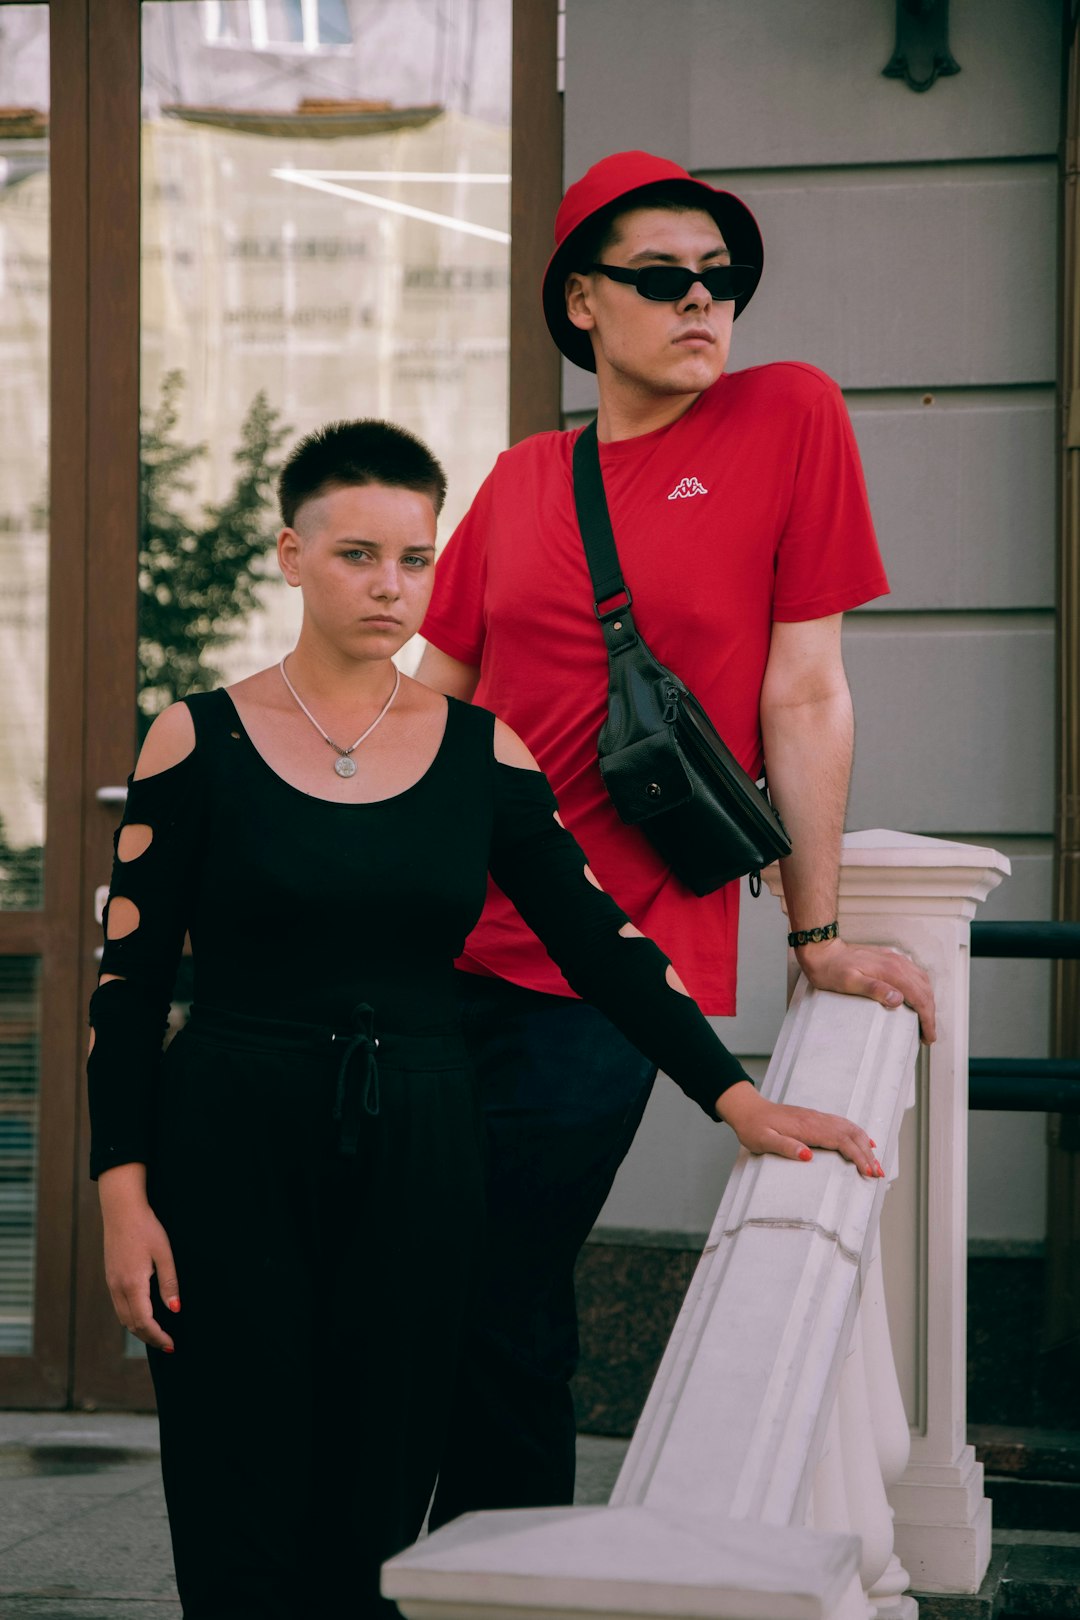 woman in black dress standing beside man in red shirt